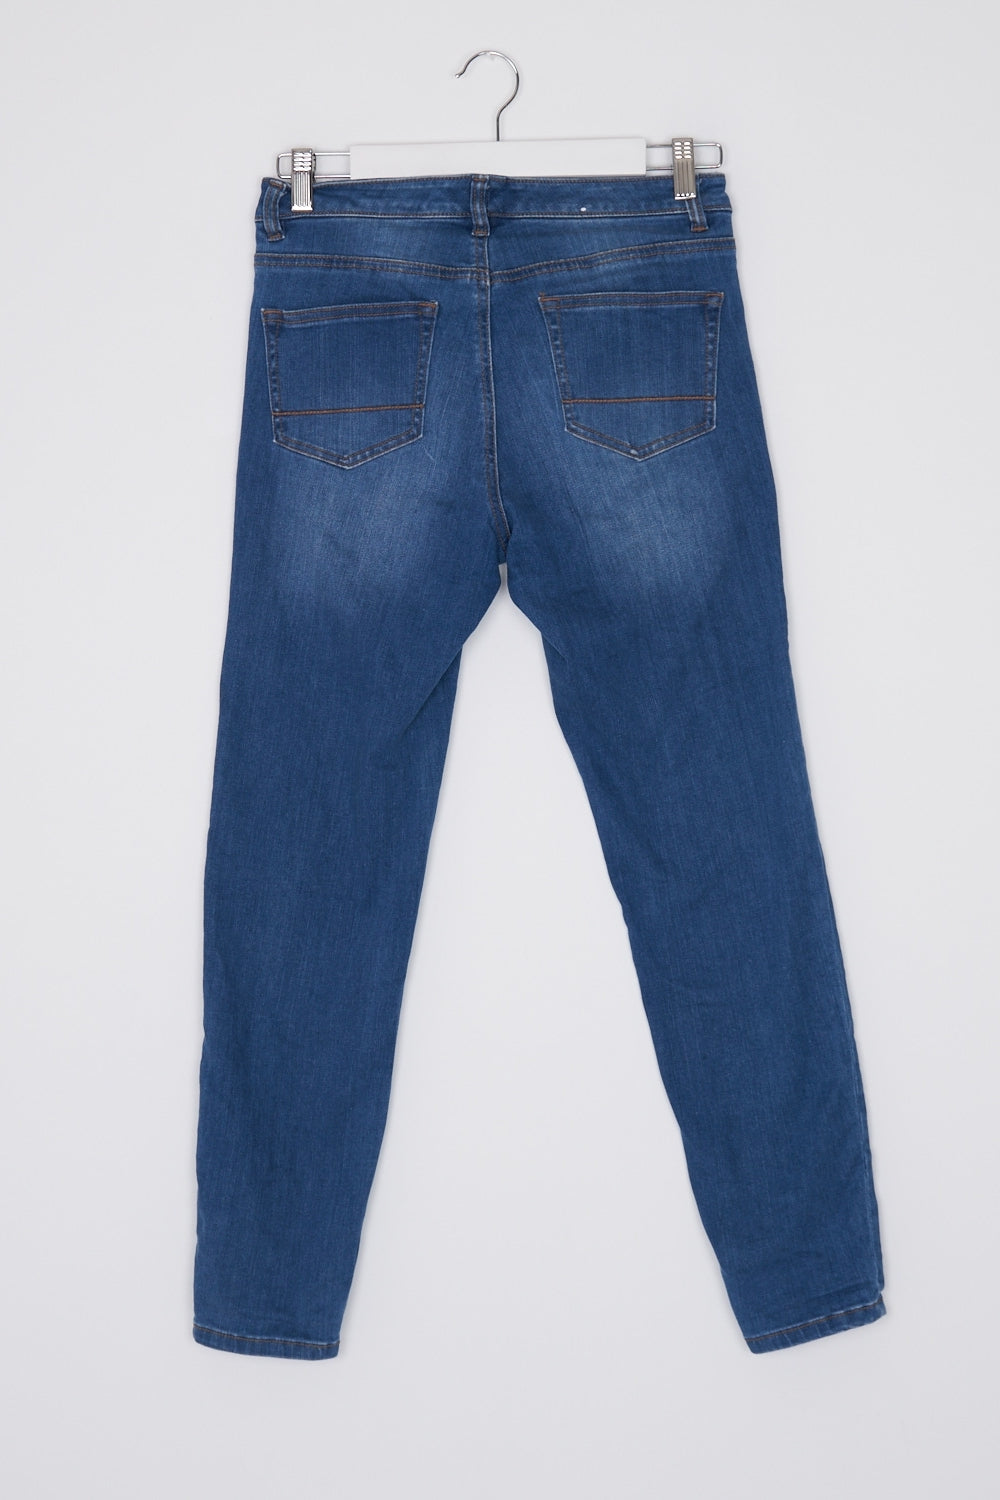 Trenery Blue Skinny Jeans 6